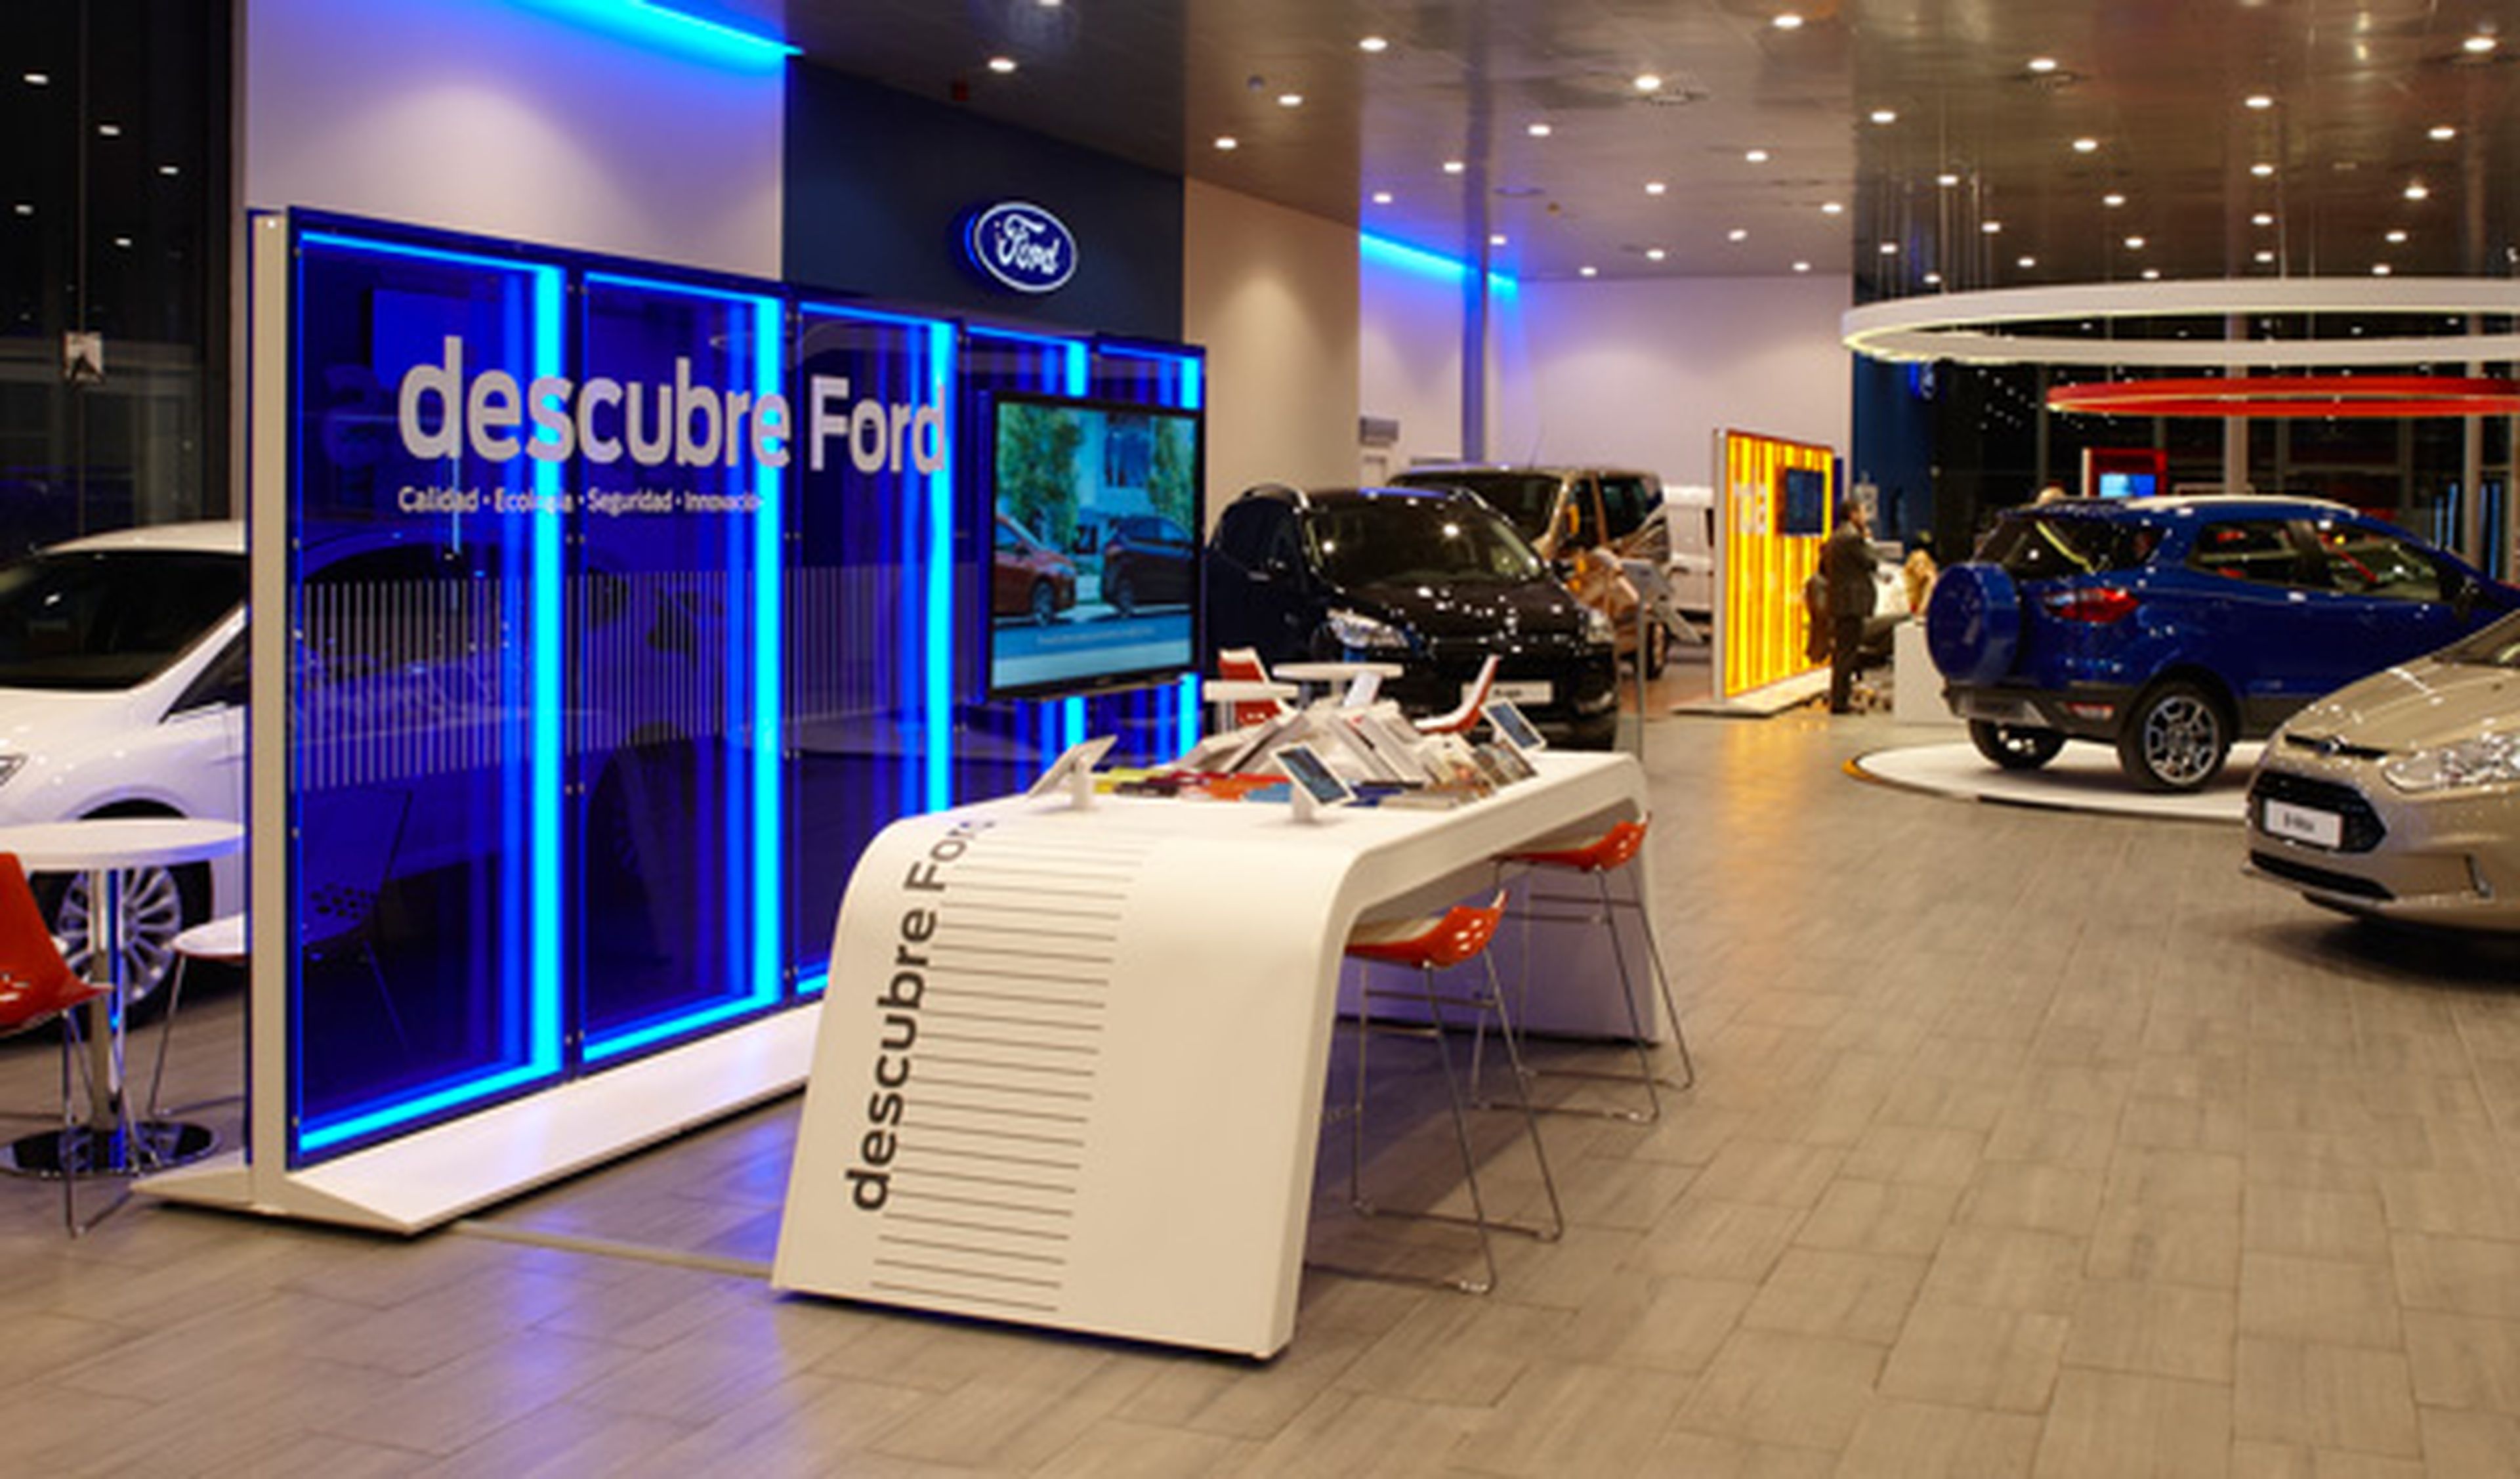 El primer Ford Store de Europa abre en Barcelona